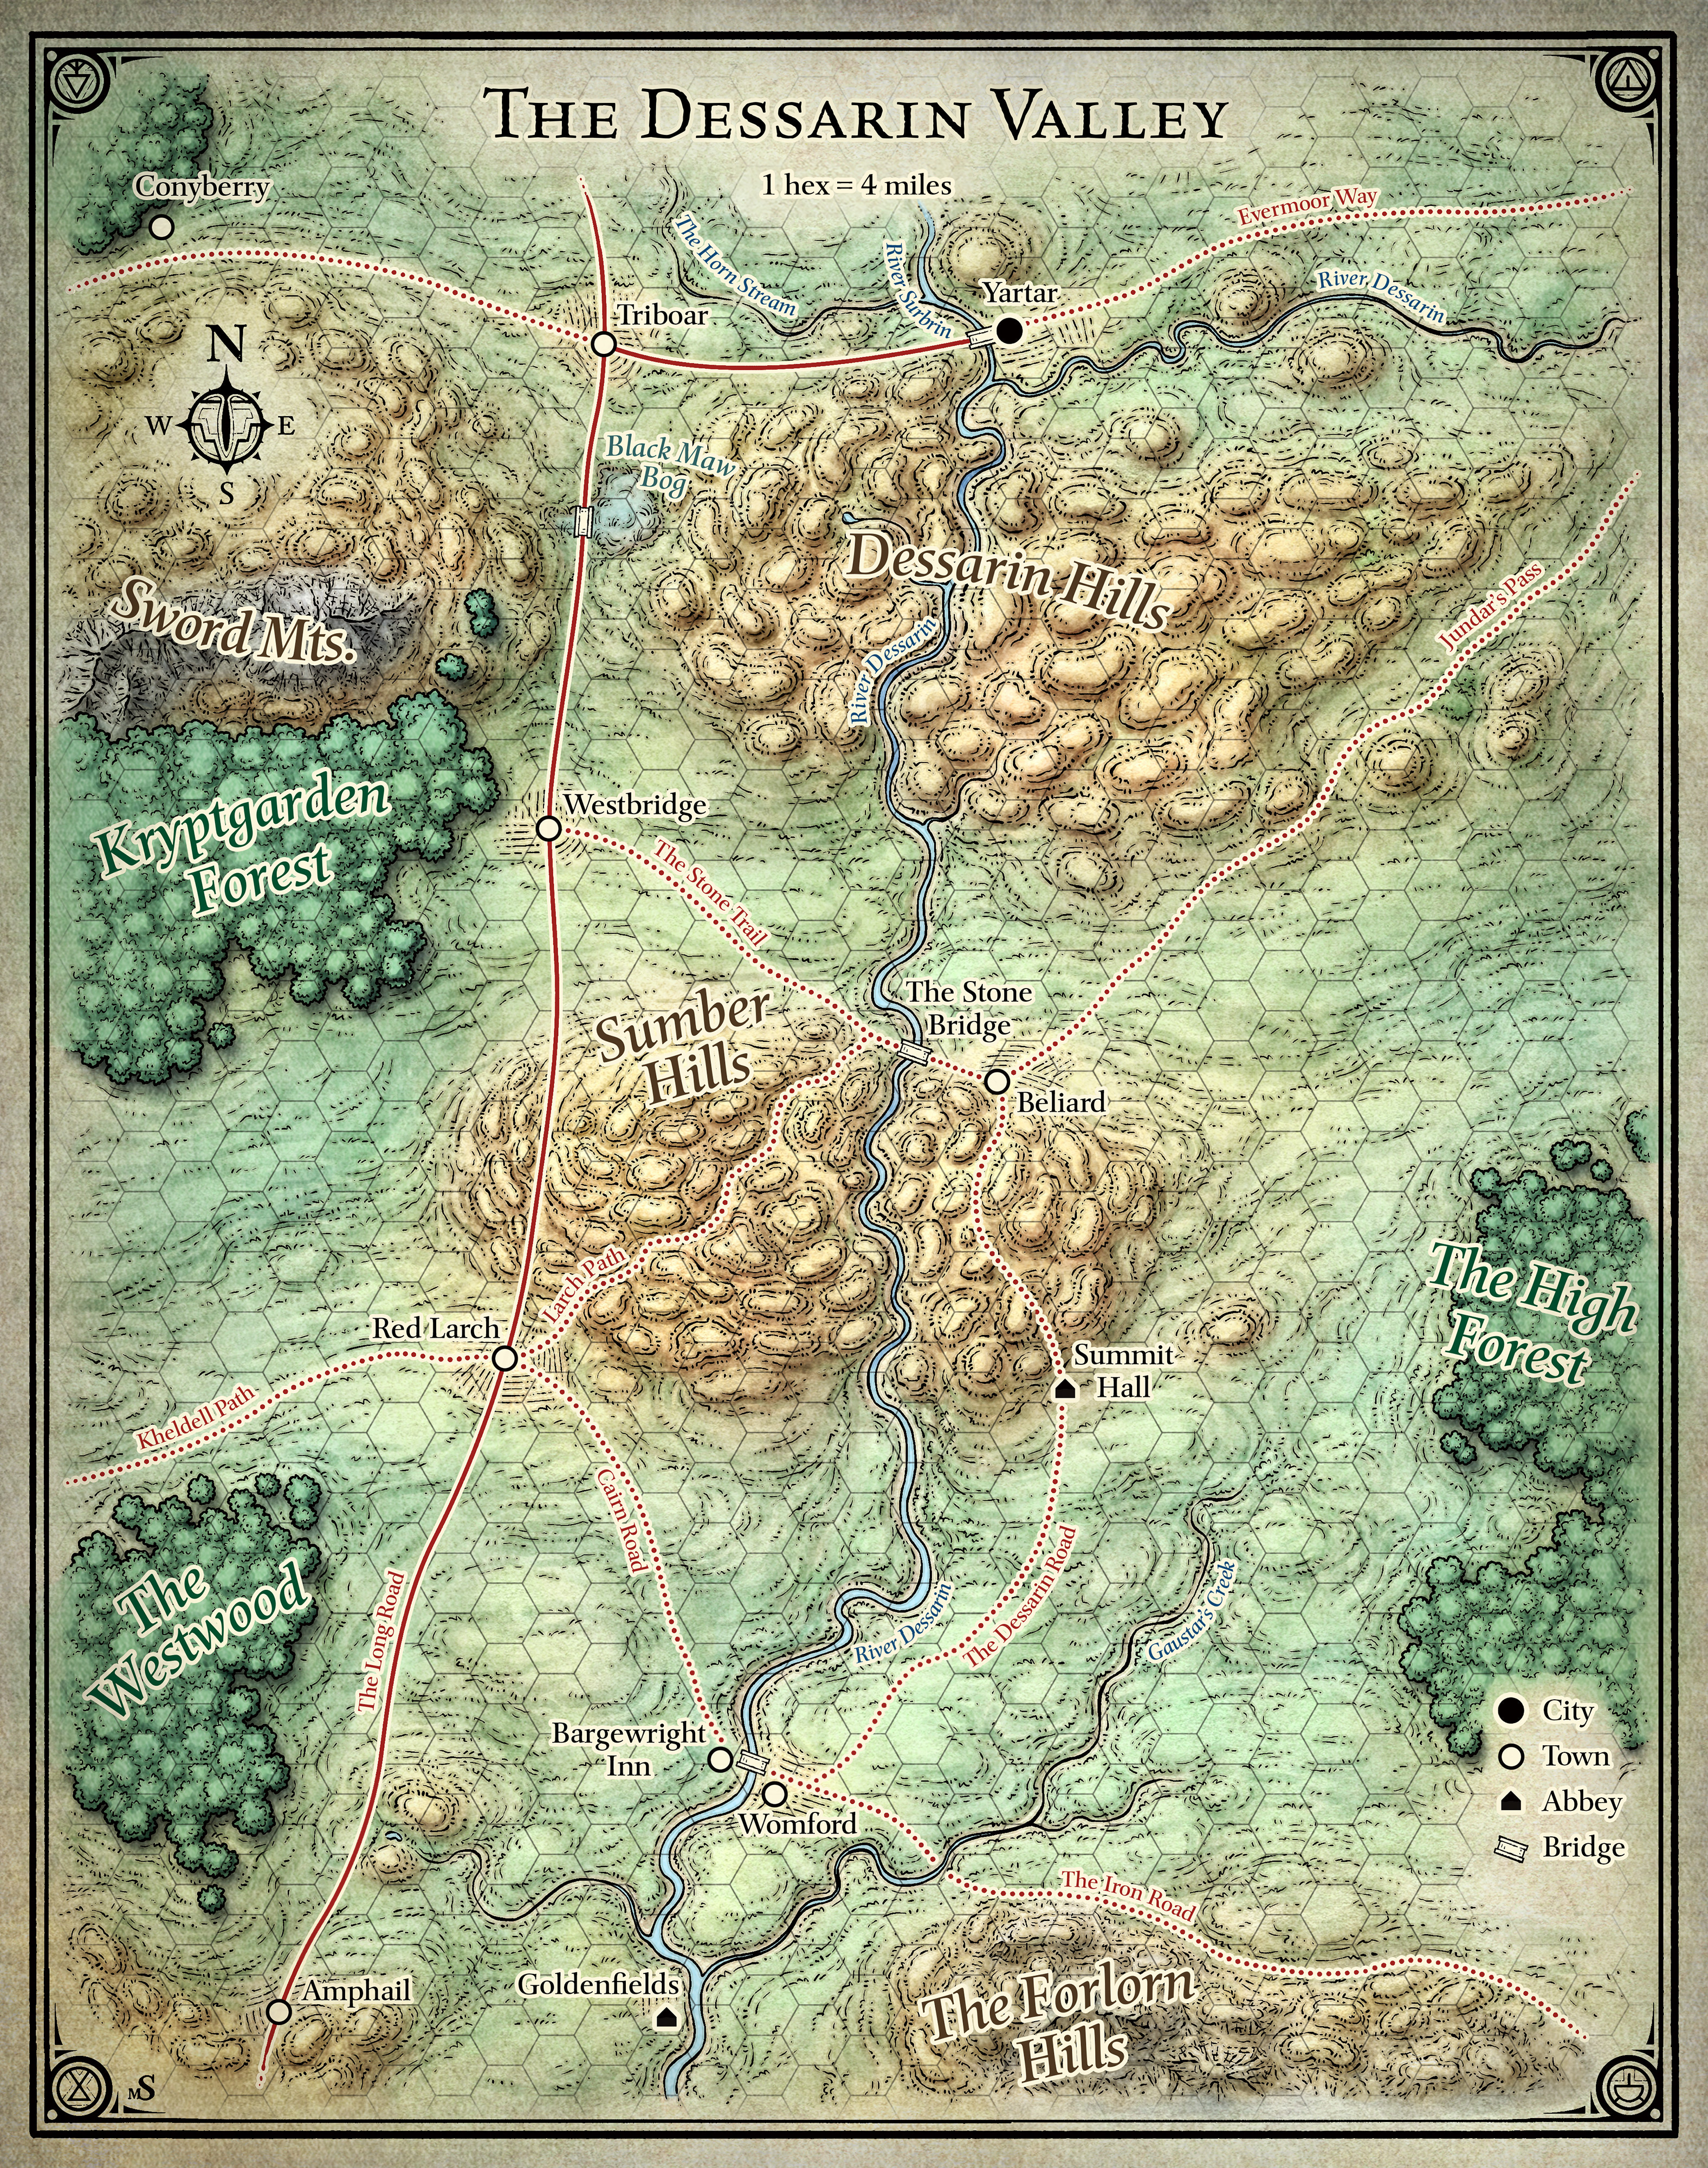 Player's Dessarin Valley Map